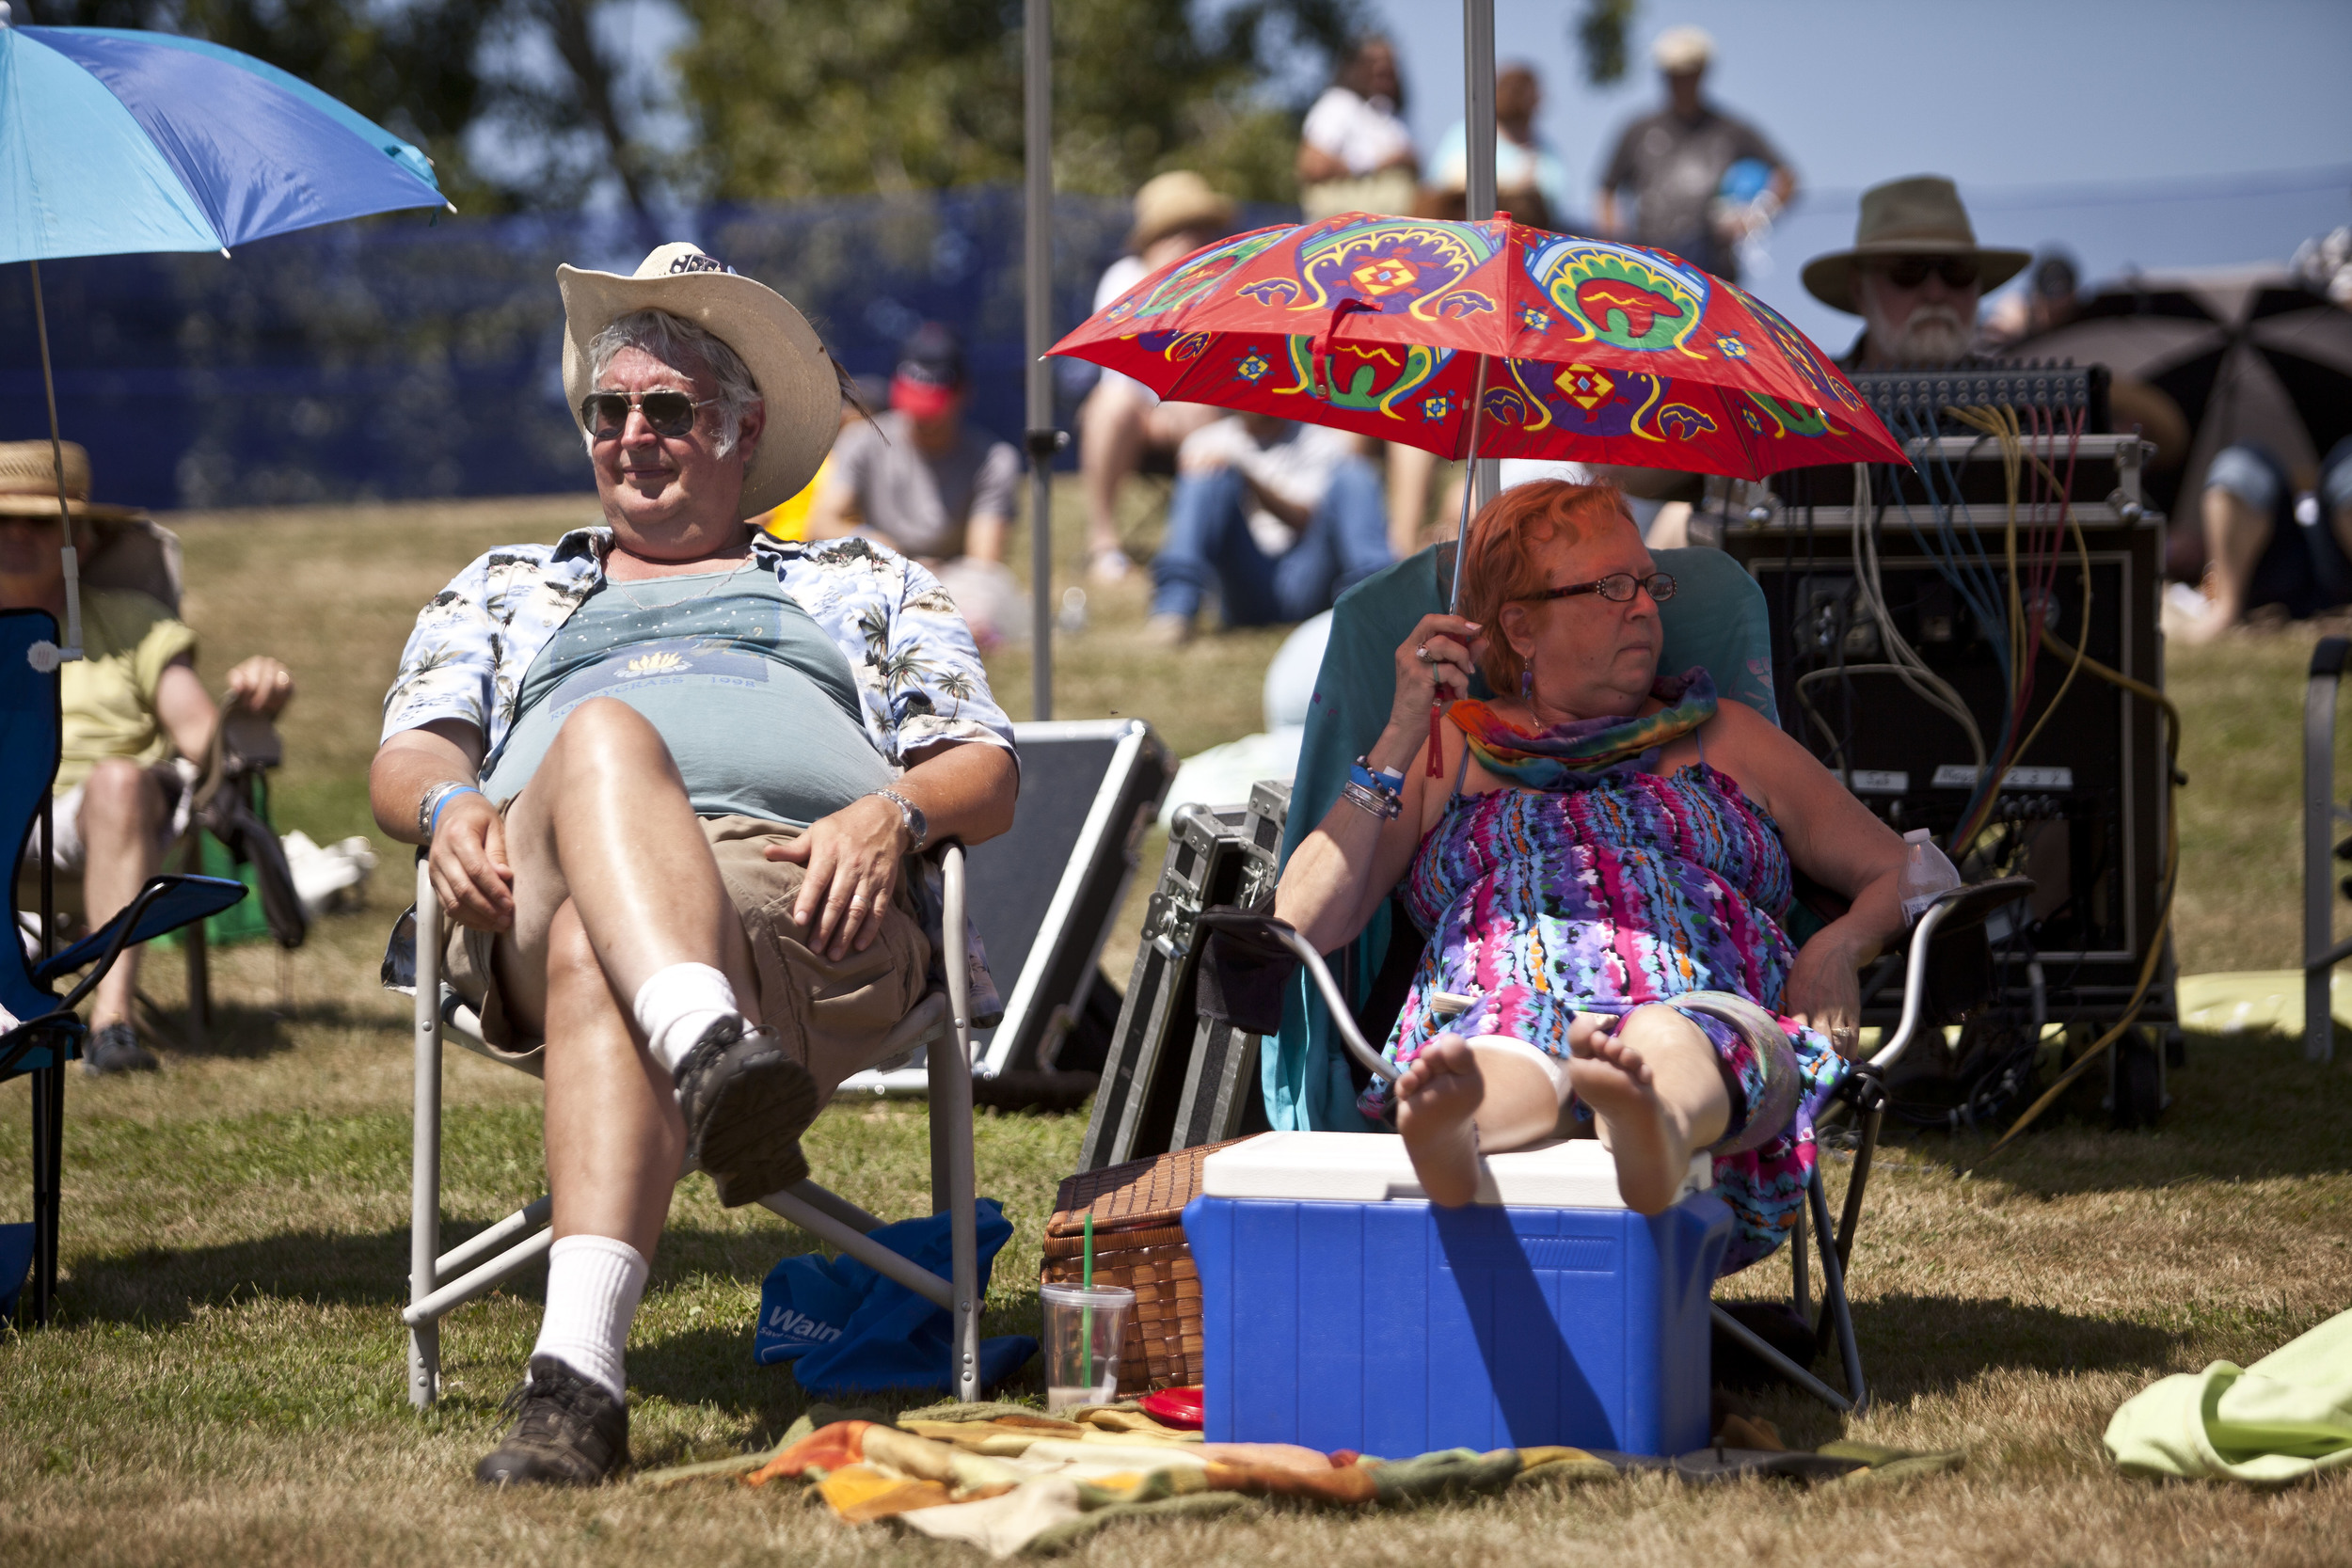  One couple enjoys the show at the 2014 Bainbridge Island Bluegrass Festival.&nbsp; 